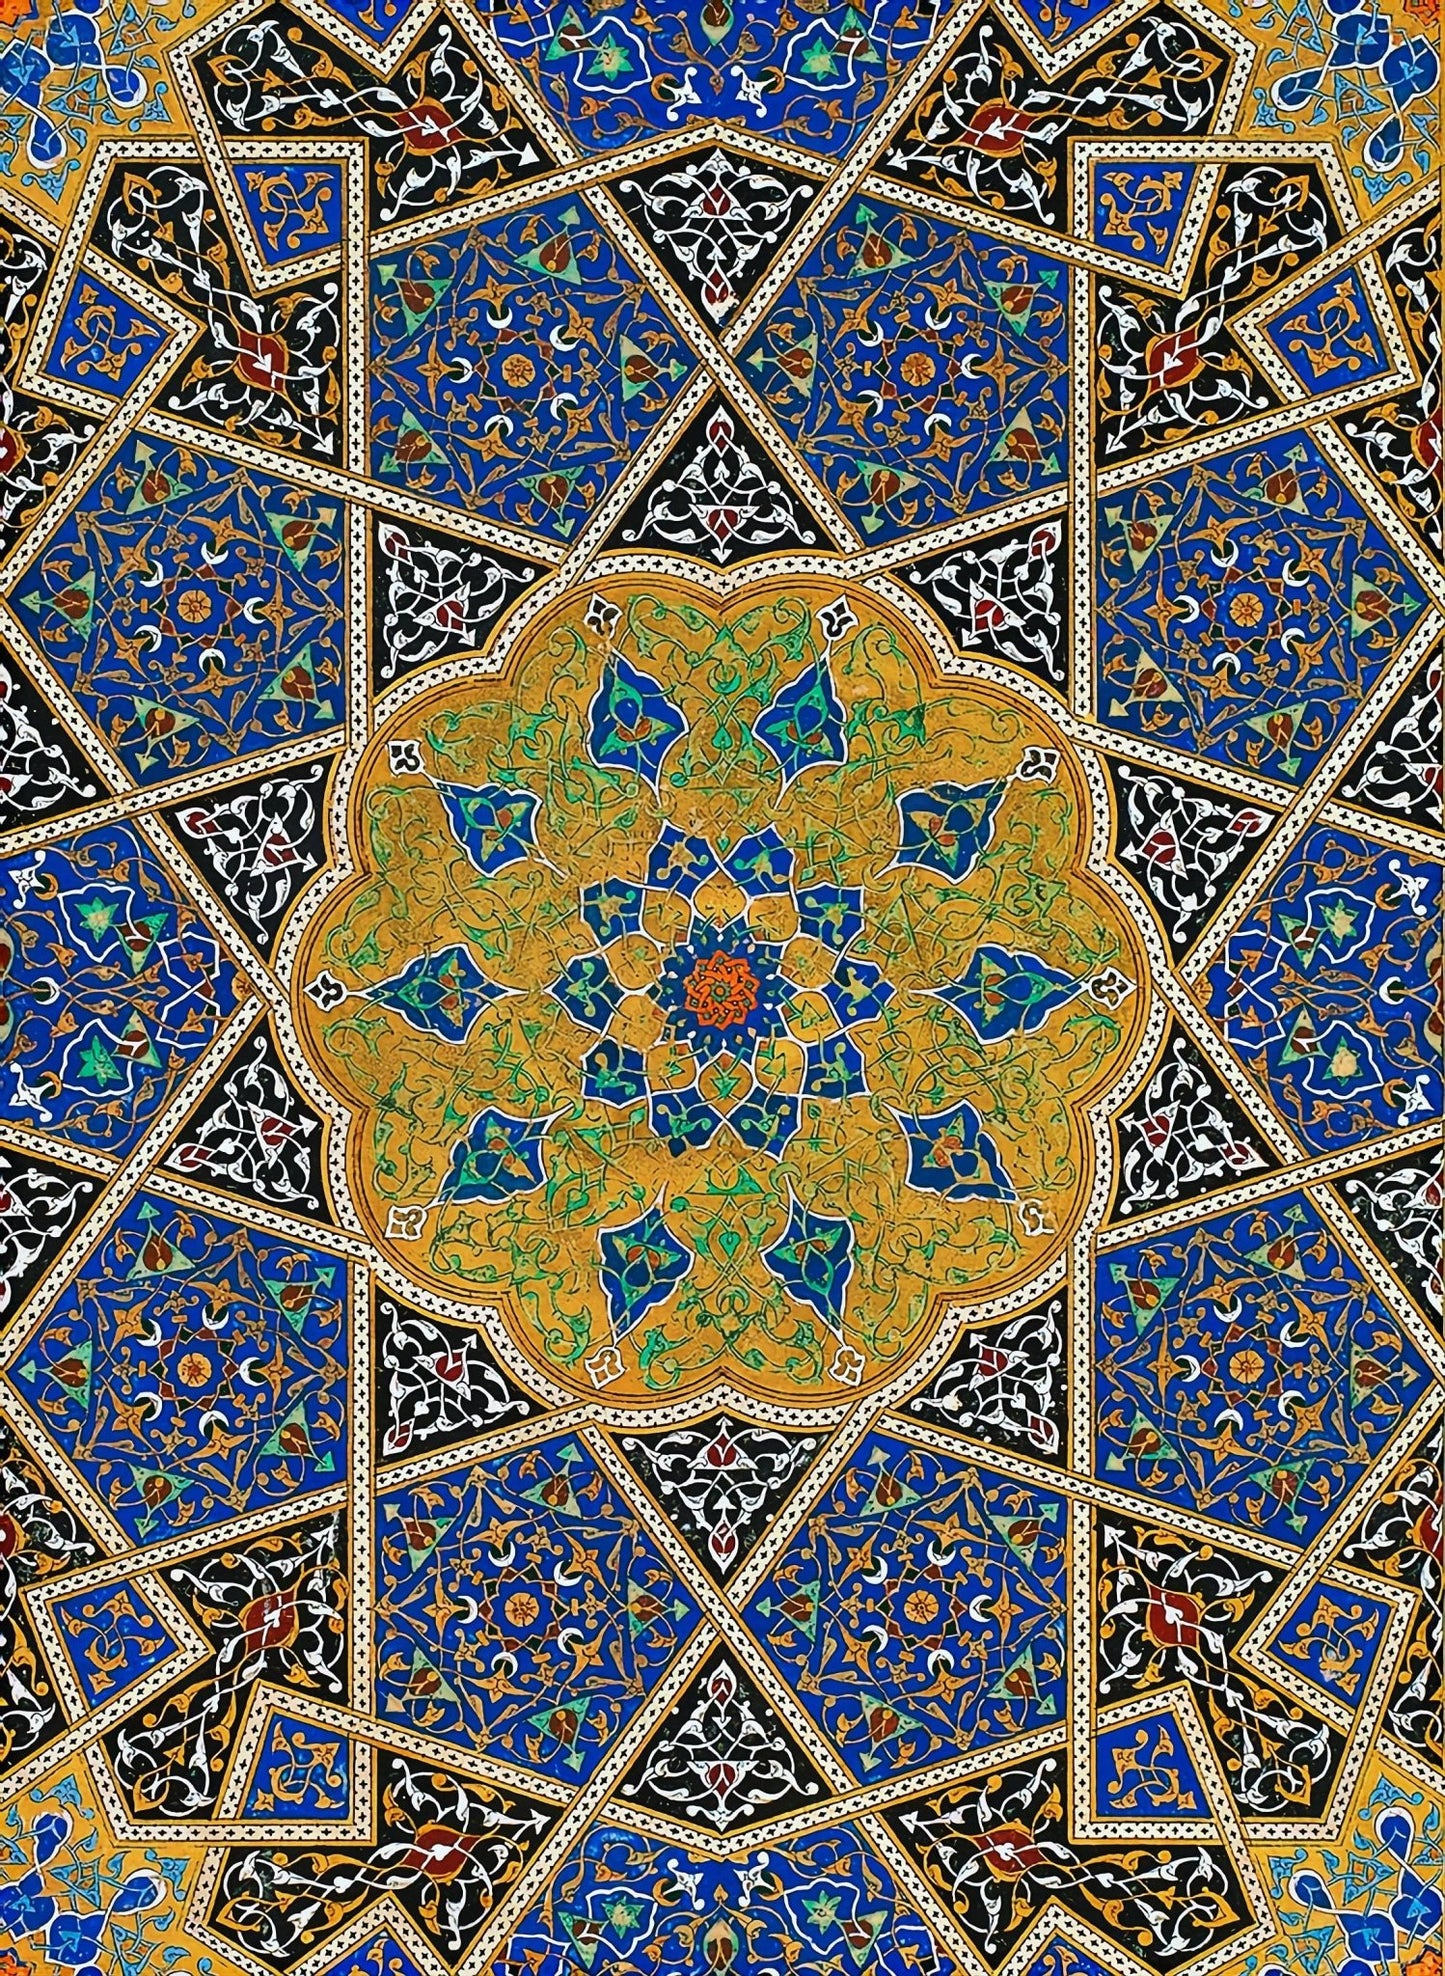 Art of Quran (Traditional Persian / Islamic Art)